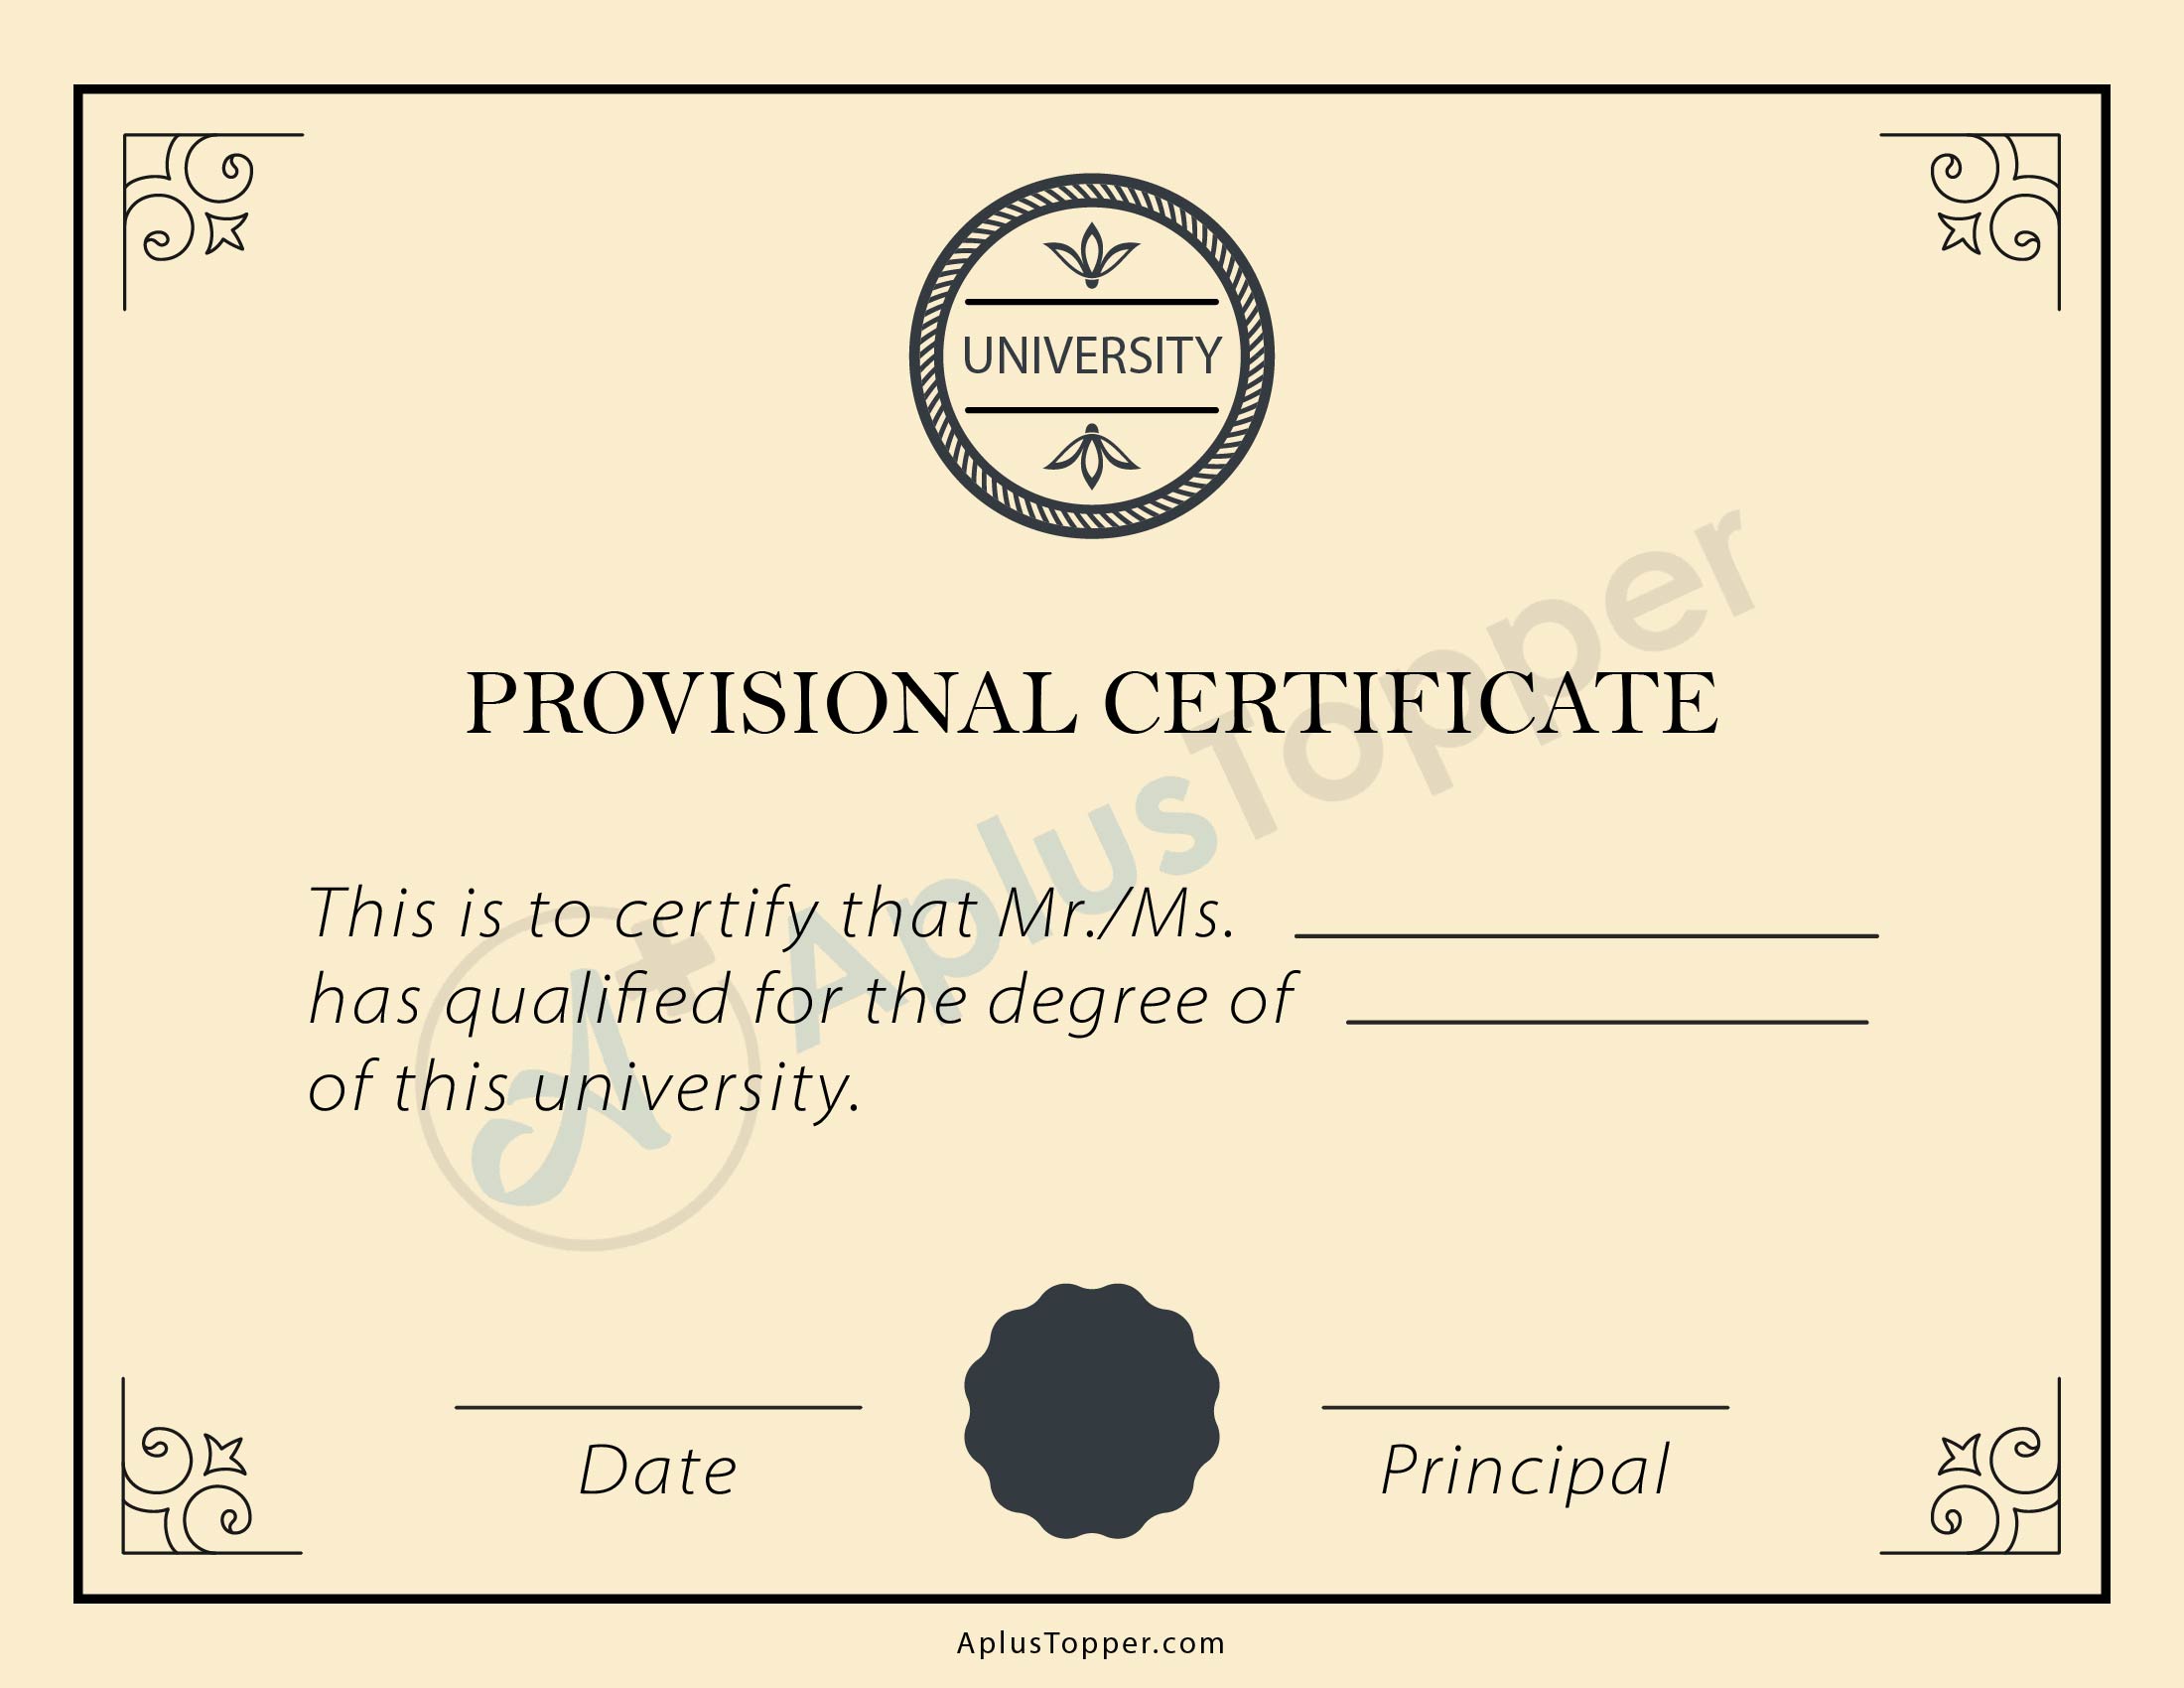 Provisional Certificate 